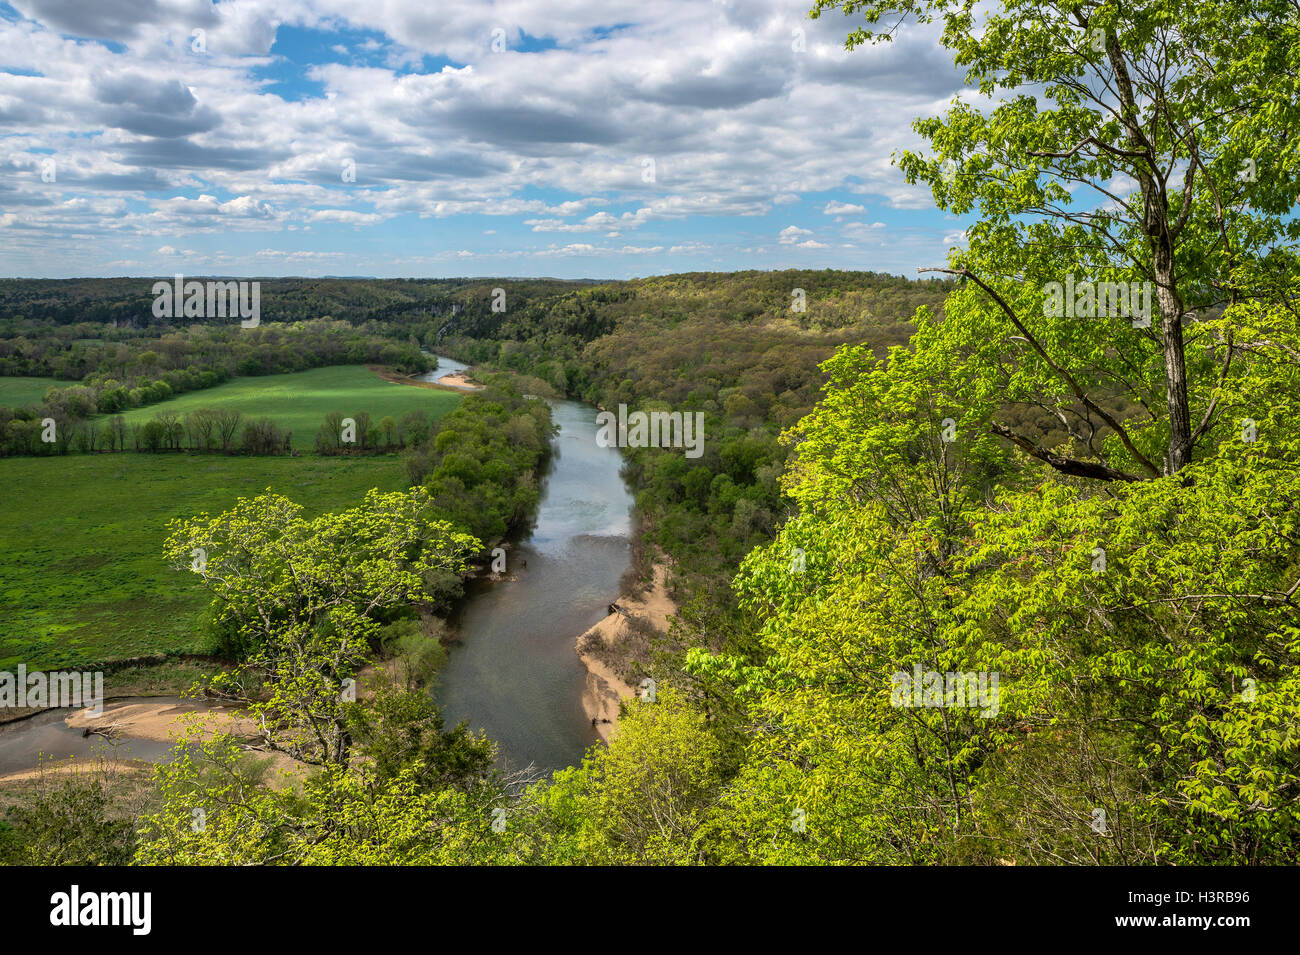 Buffalo National River, Arkansas: Buffalo River in der Nähe von Tyler Bend Vorfrühling Stockfoto